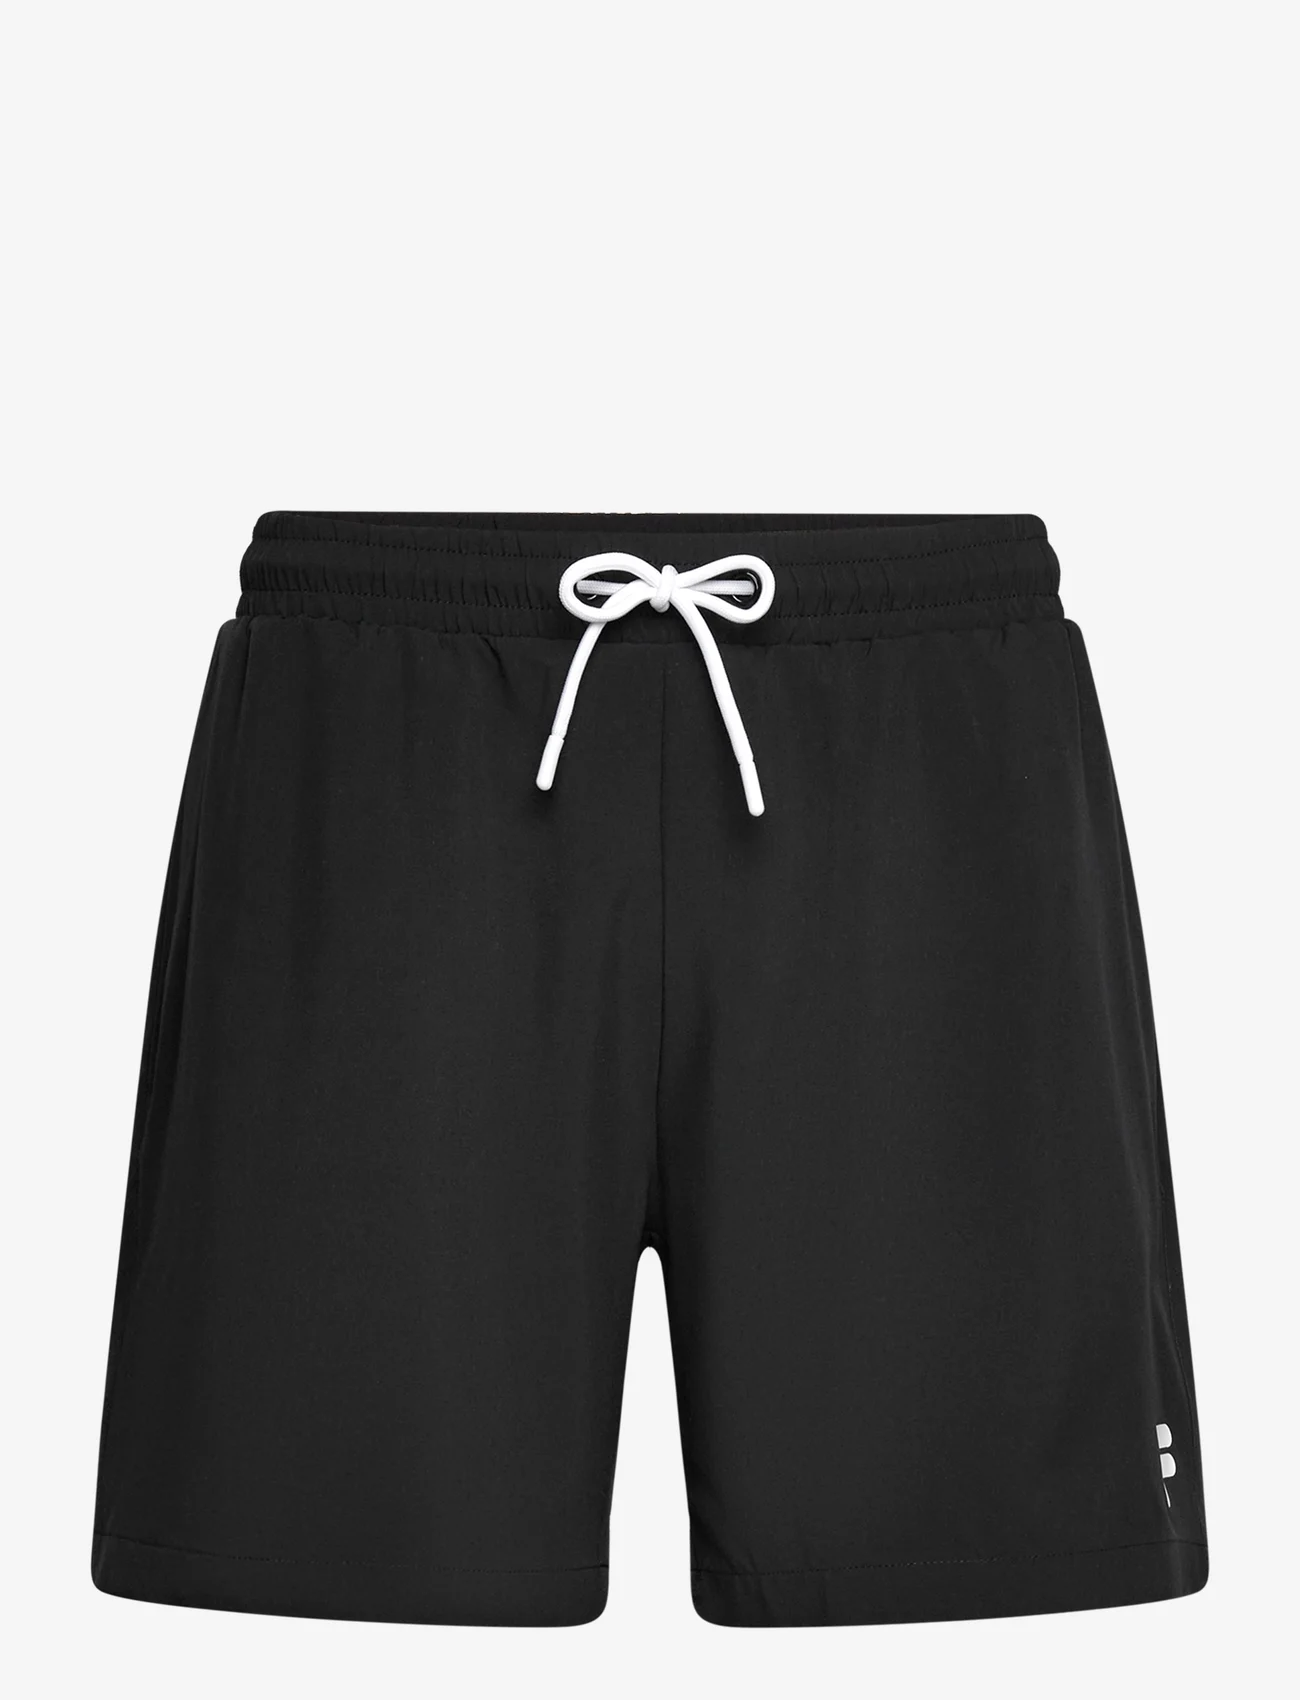 FILA - SEZZE beach shorts - badbyxor - black - 0